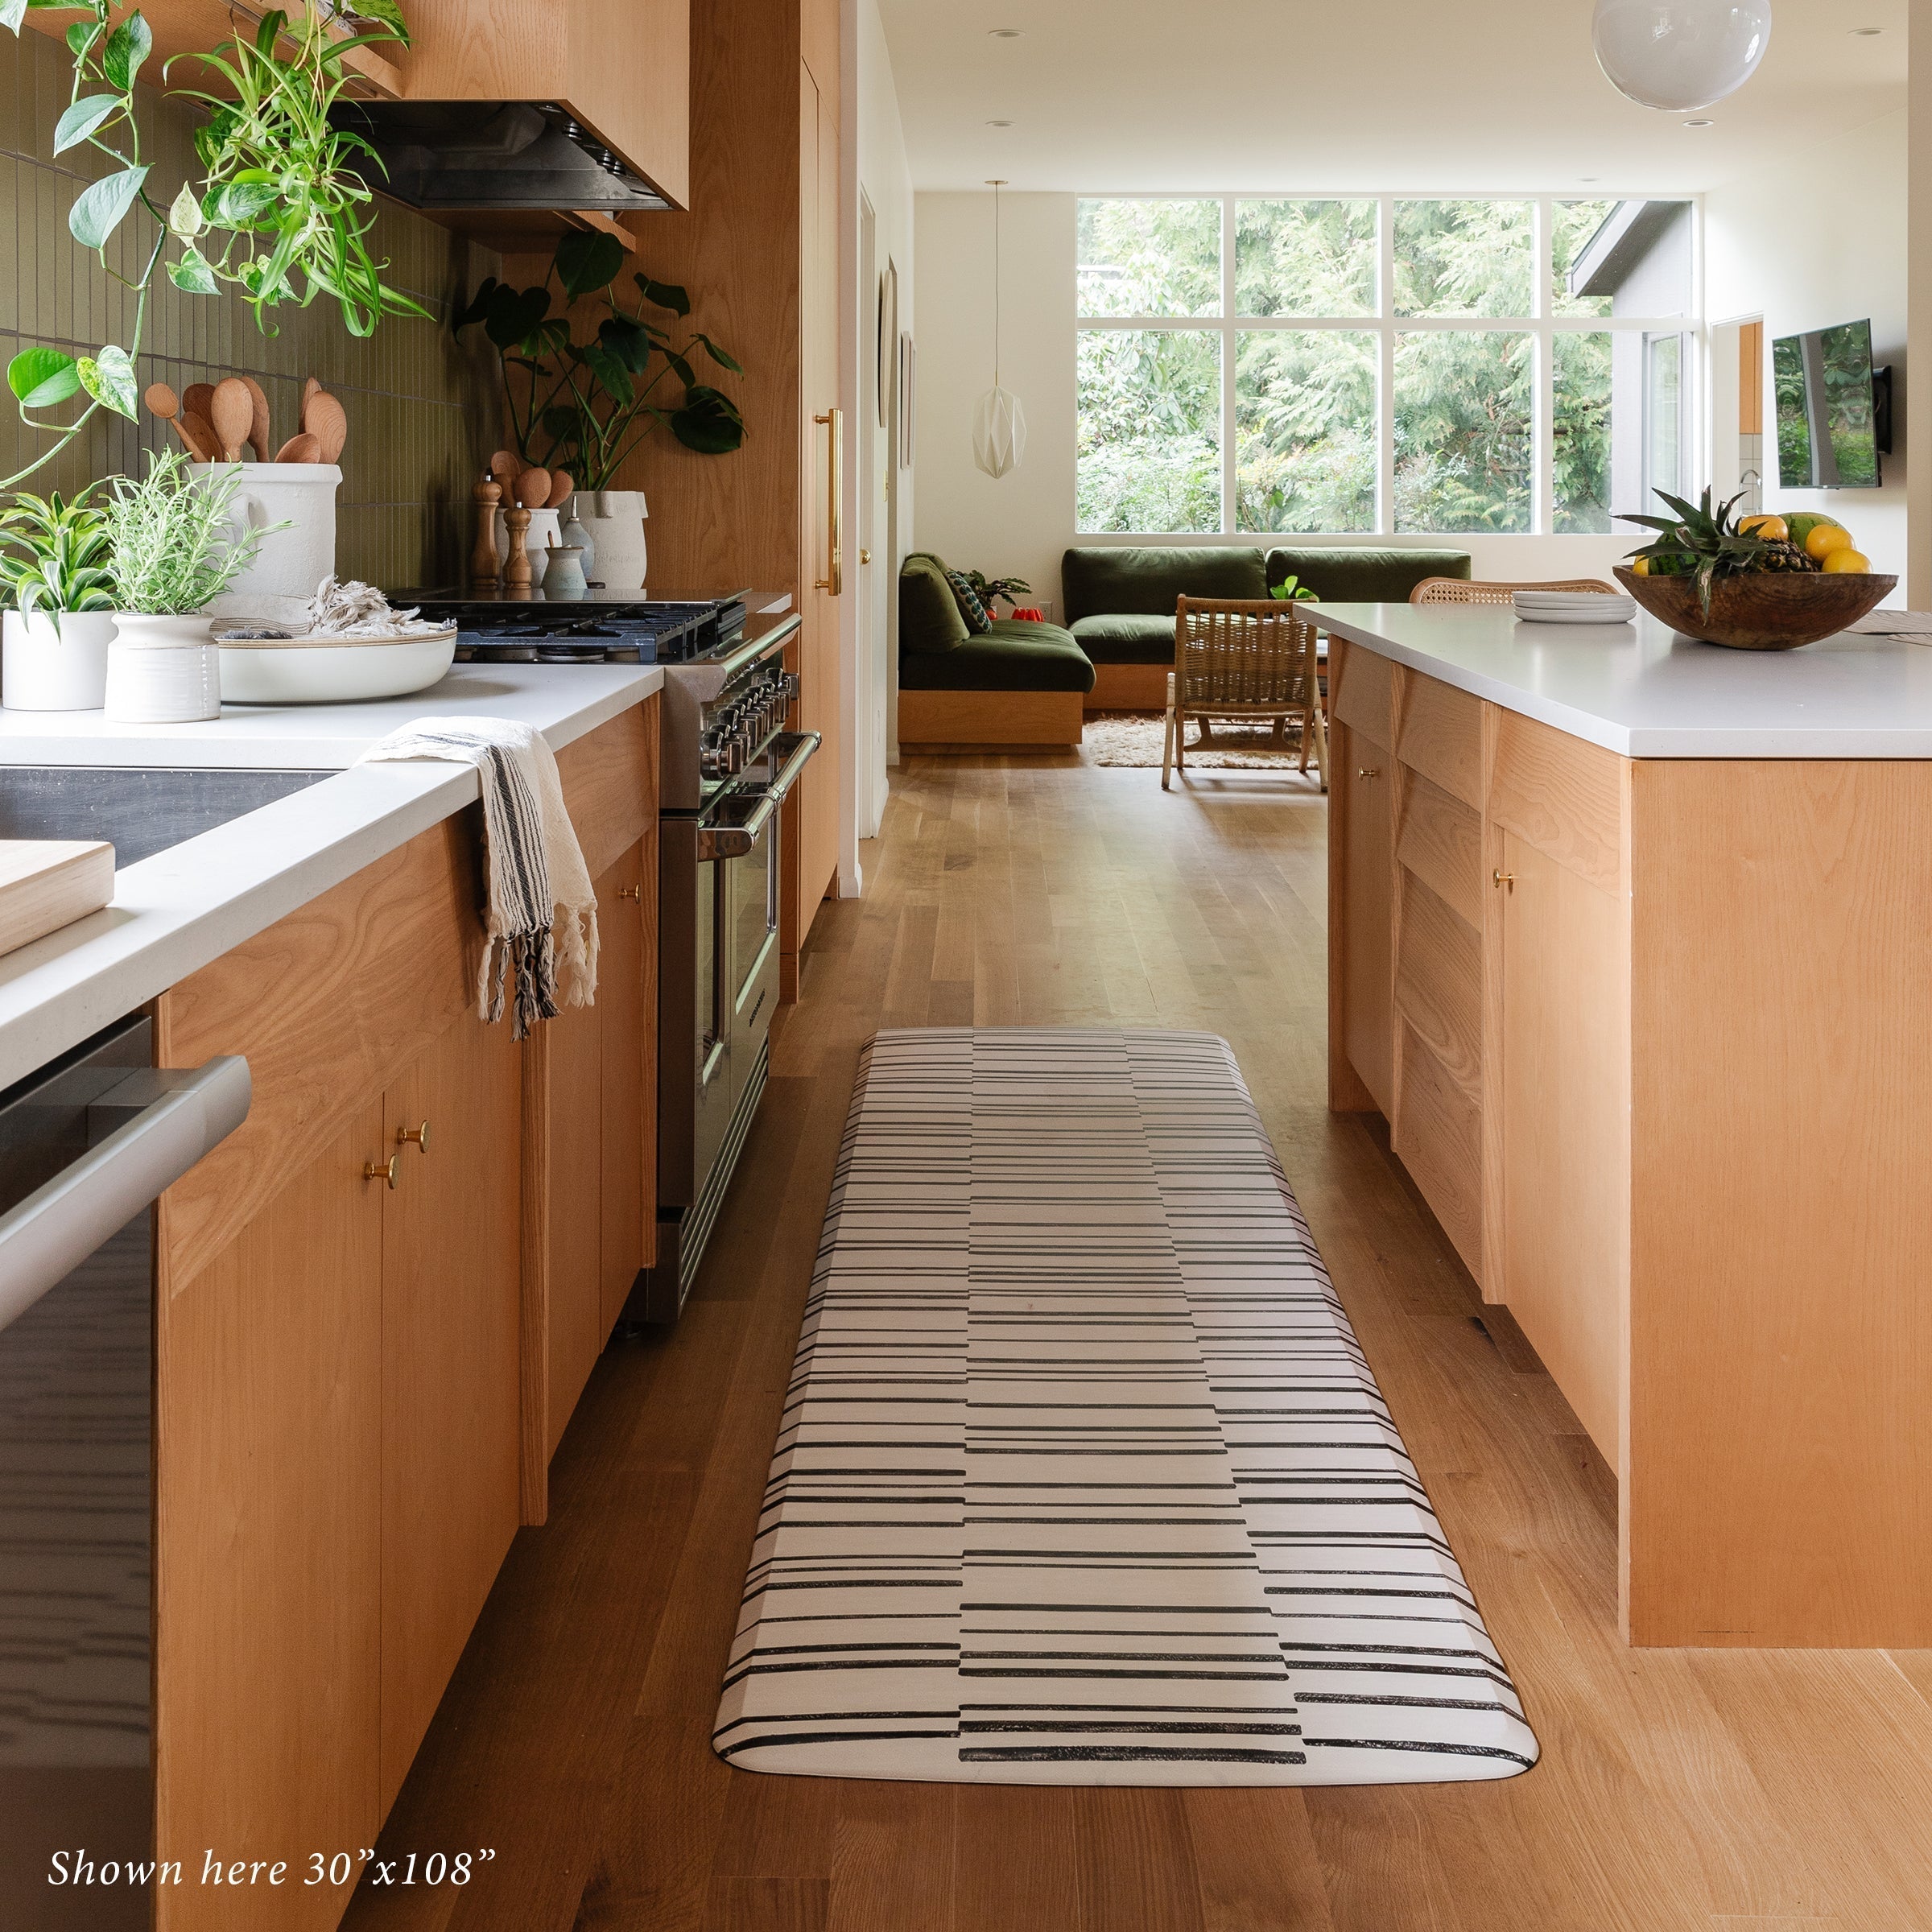 Kitchen Mats: Anti fatigue kitchen mats – the House of Noa